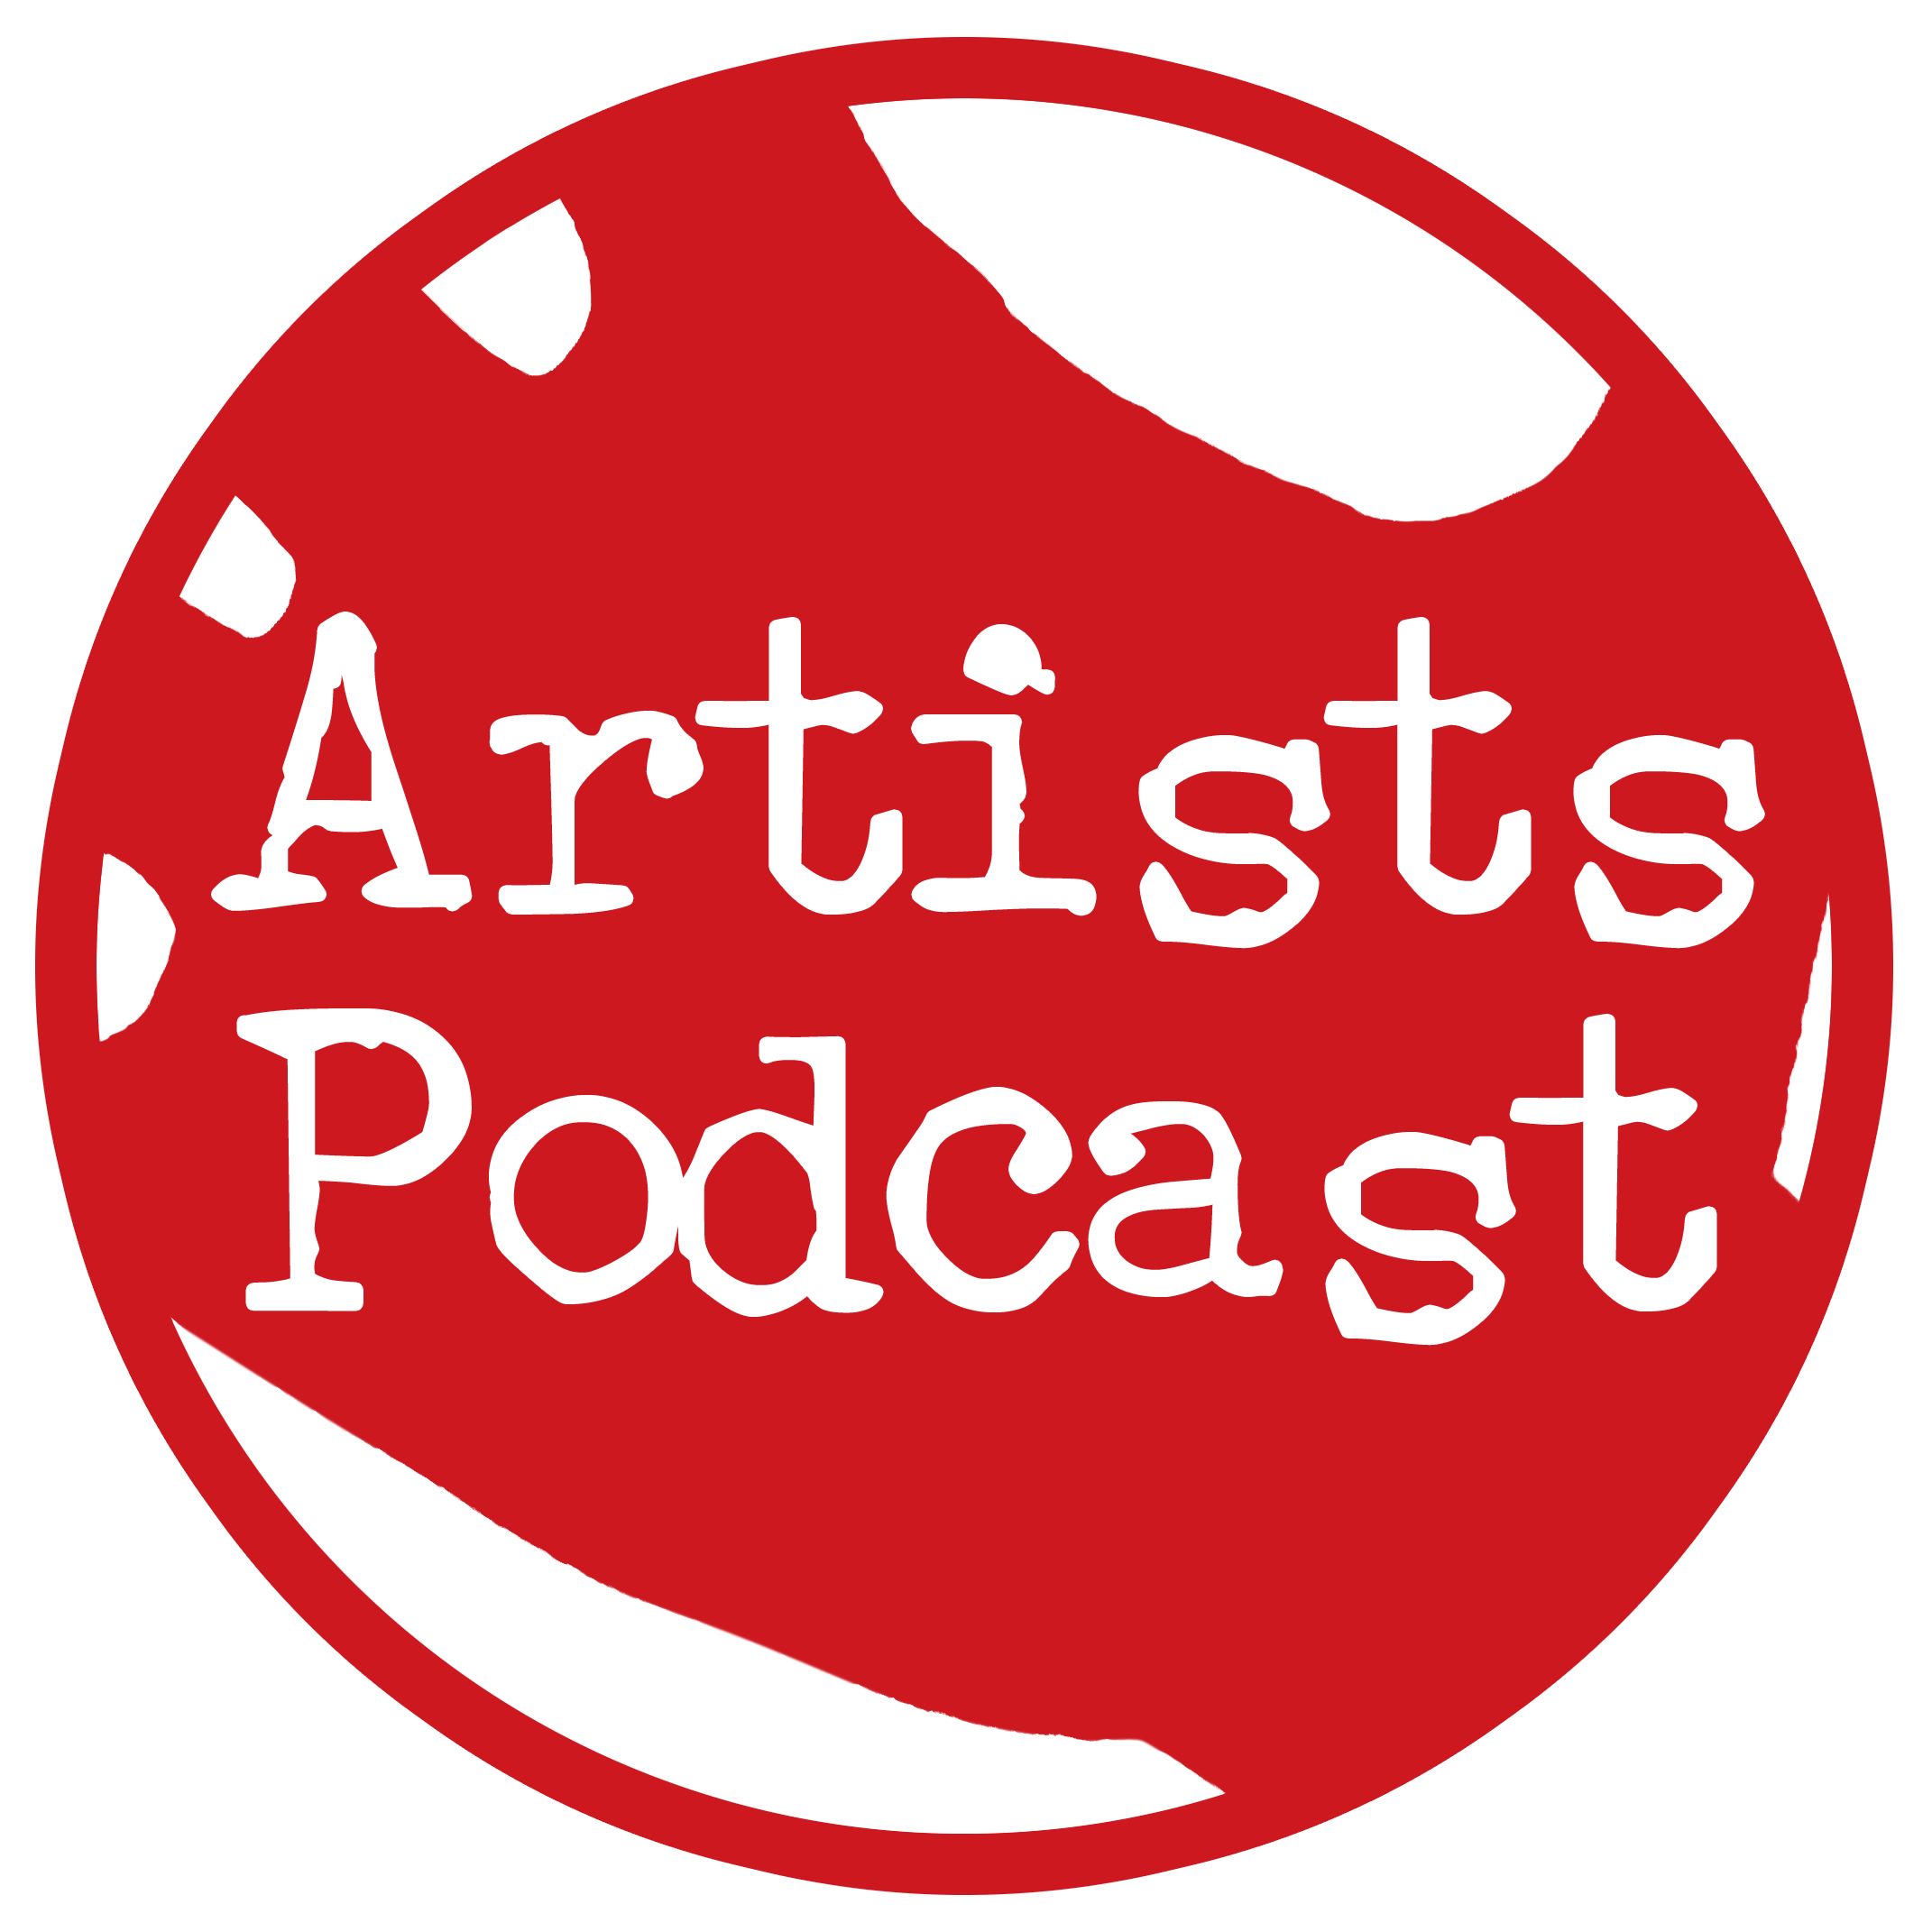 Artists Podcast